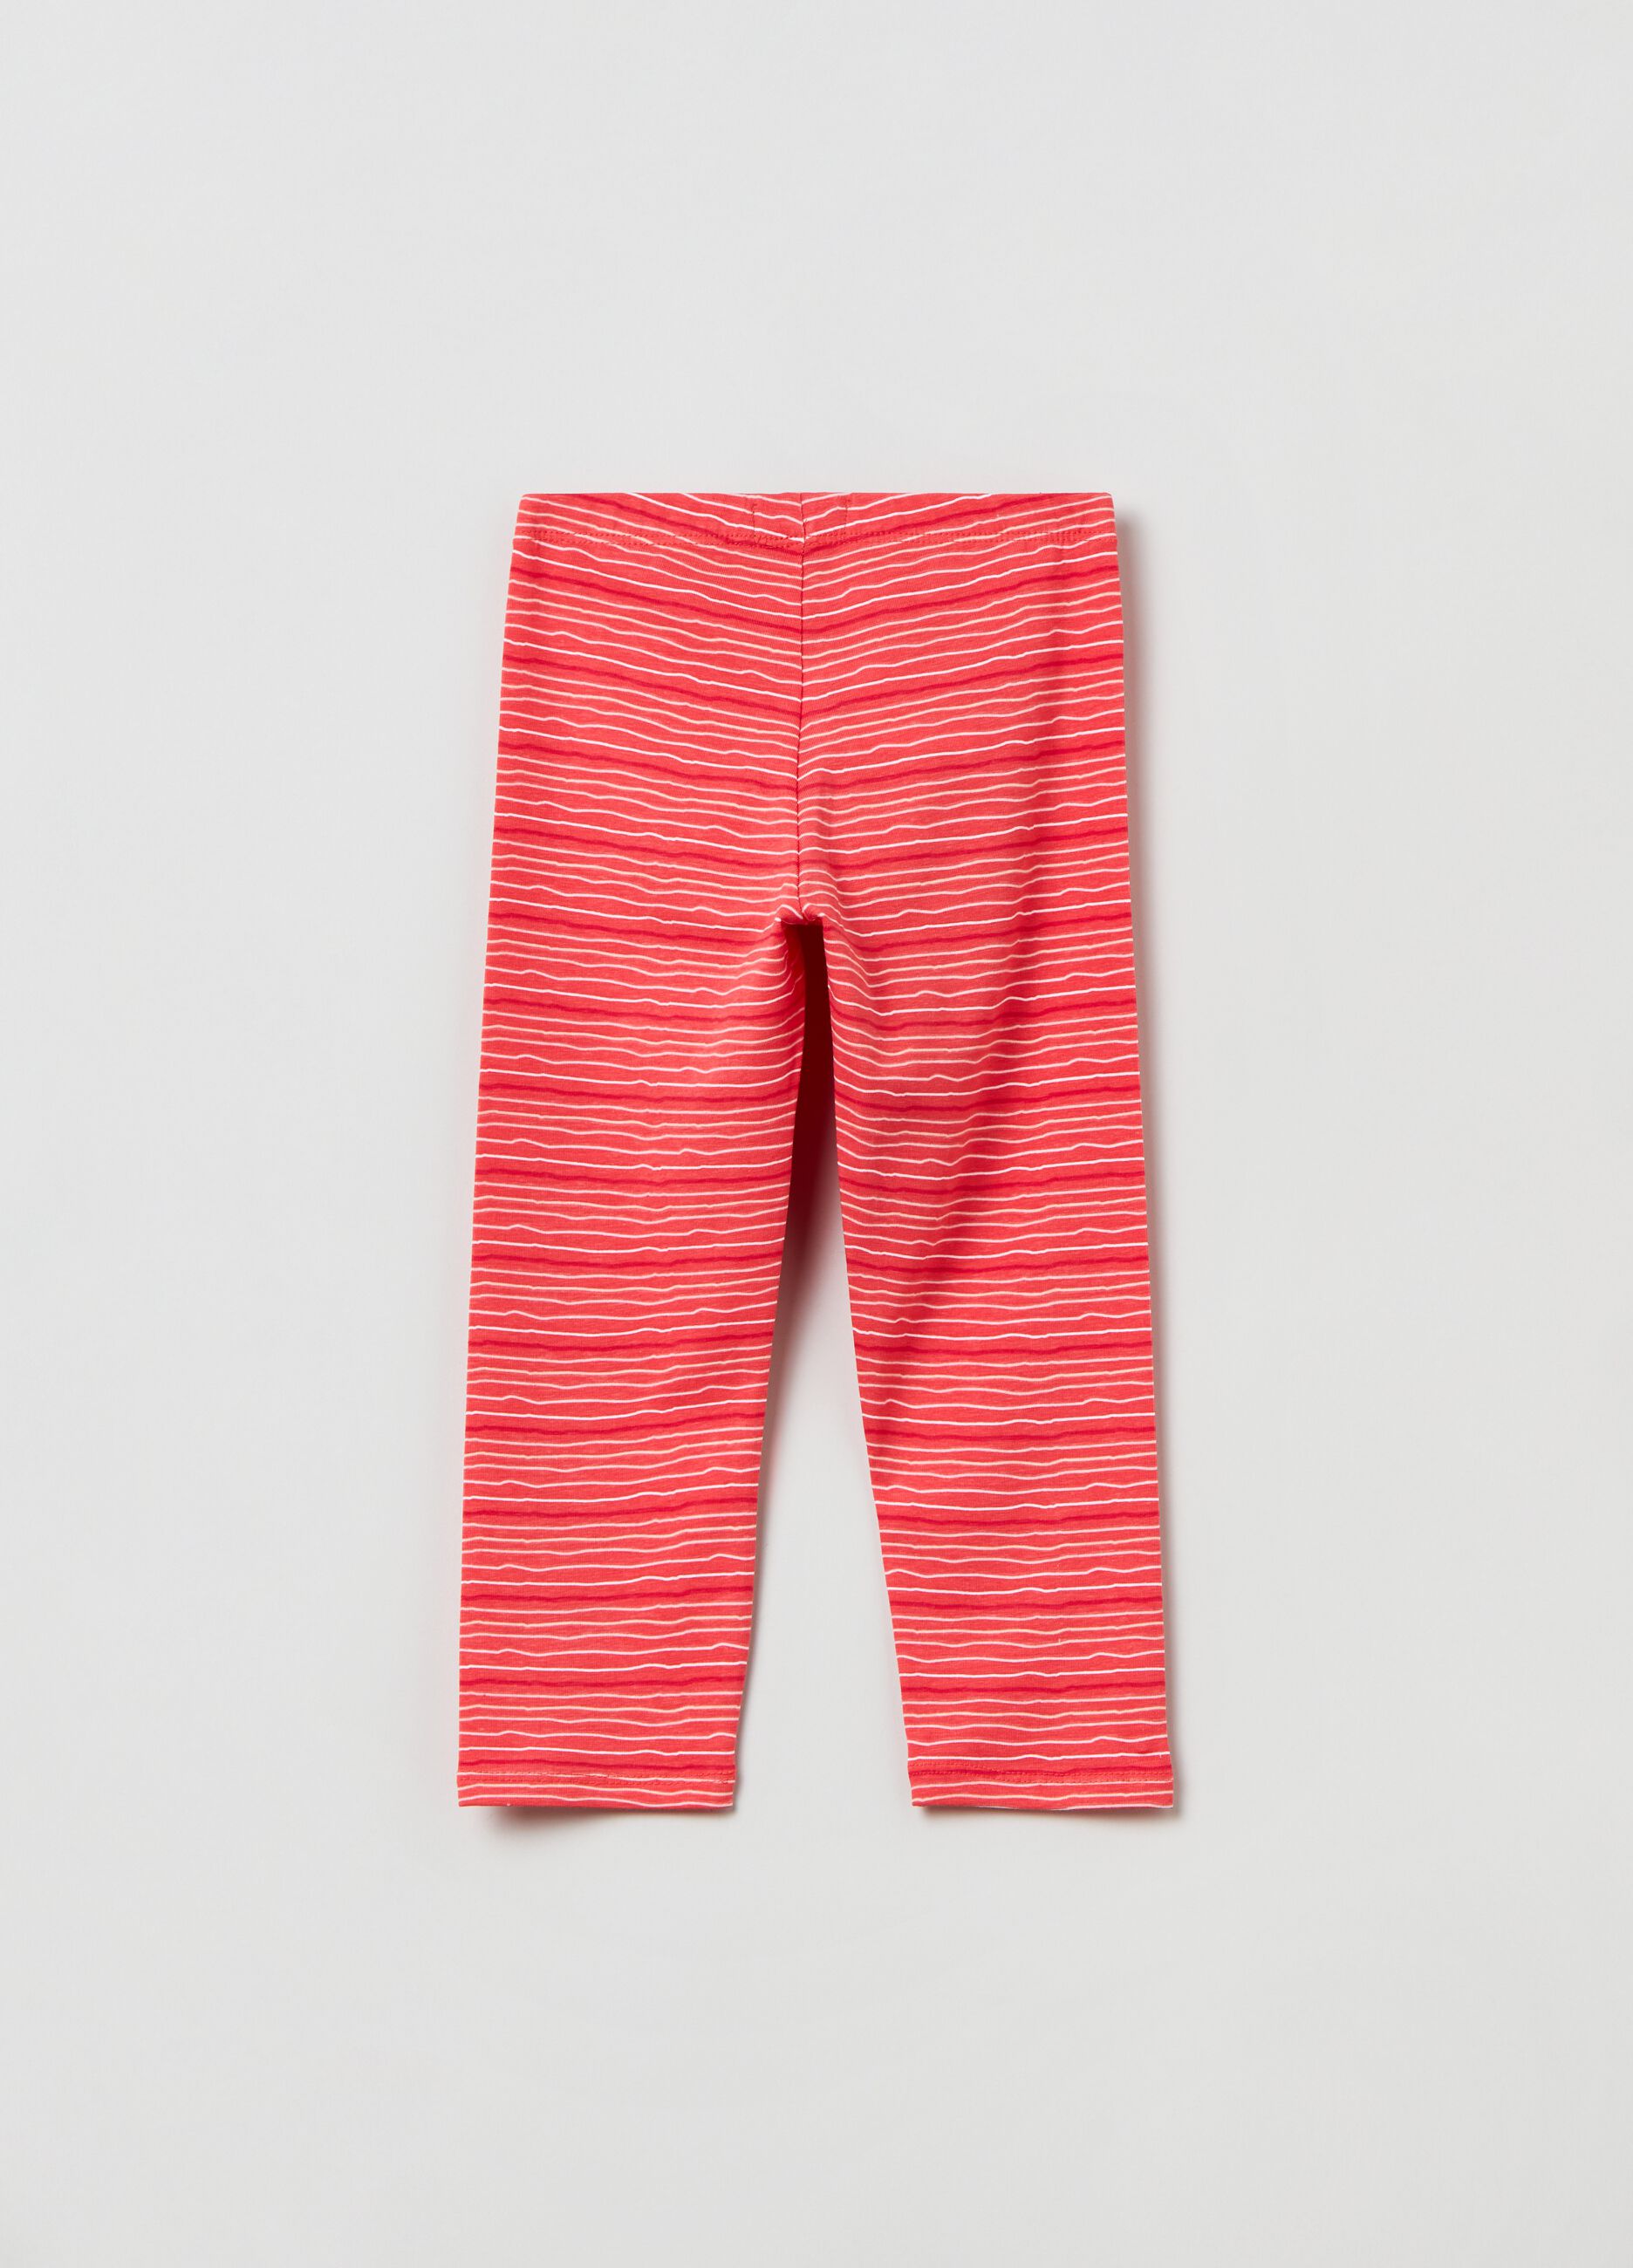 Three-quarter leggings with striped pattern